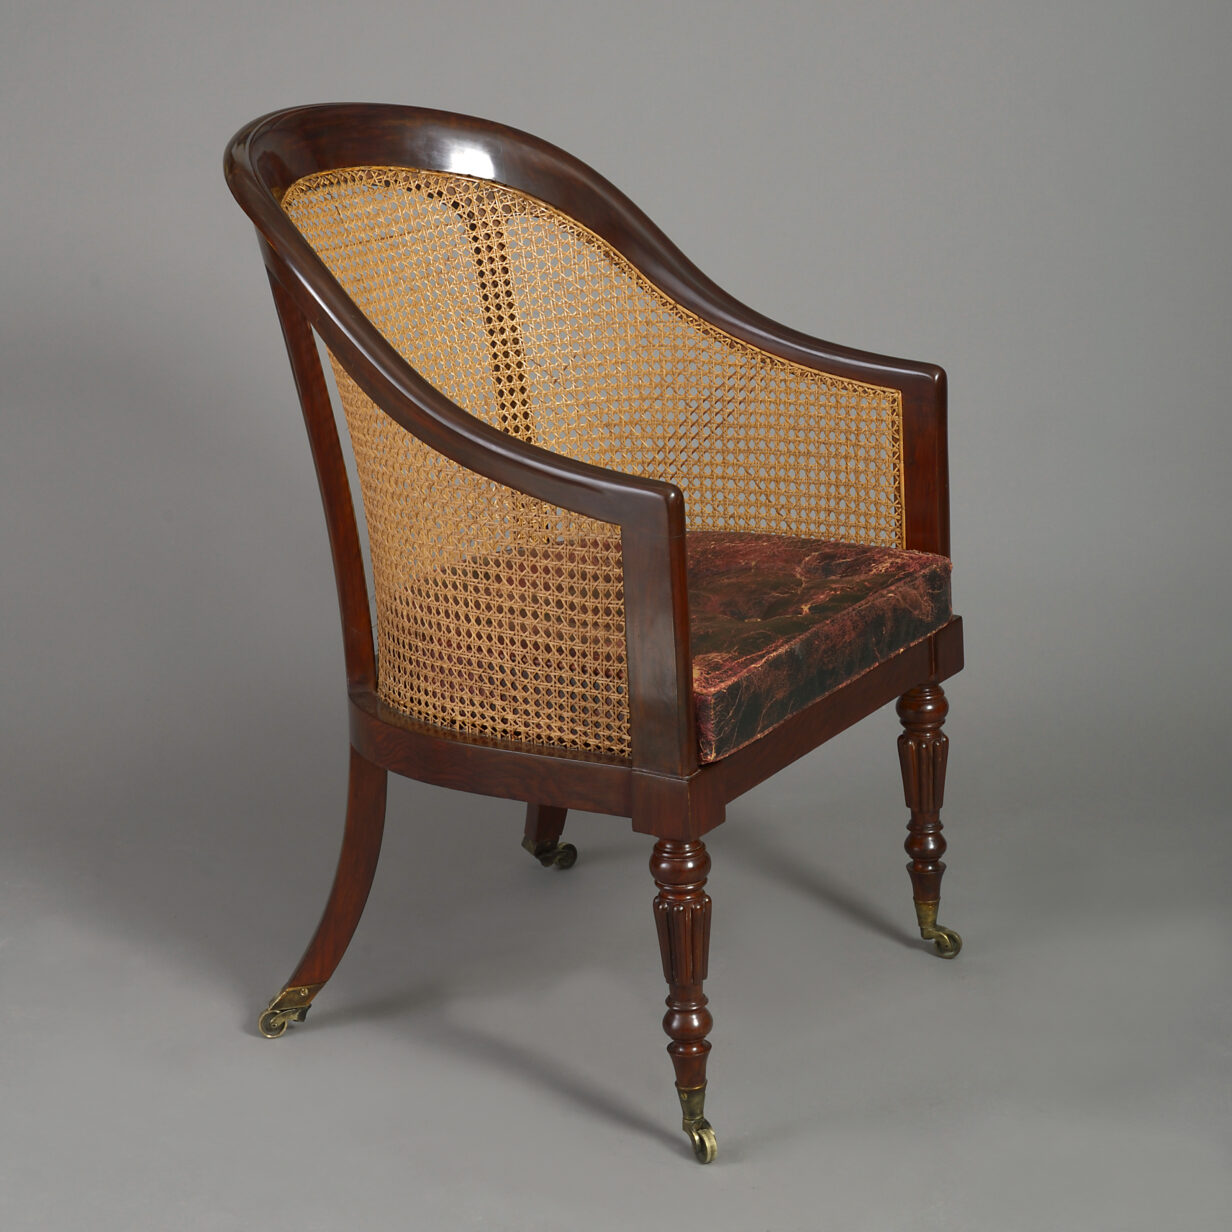 Early 19th century regency period rosewood bergère armchair